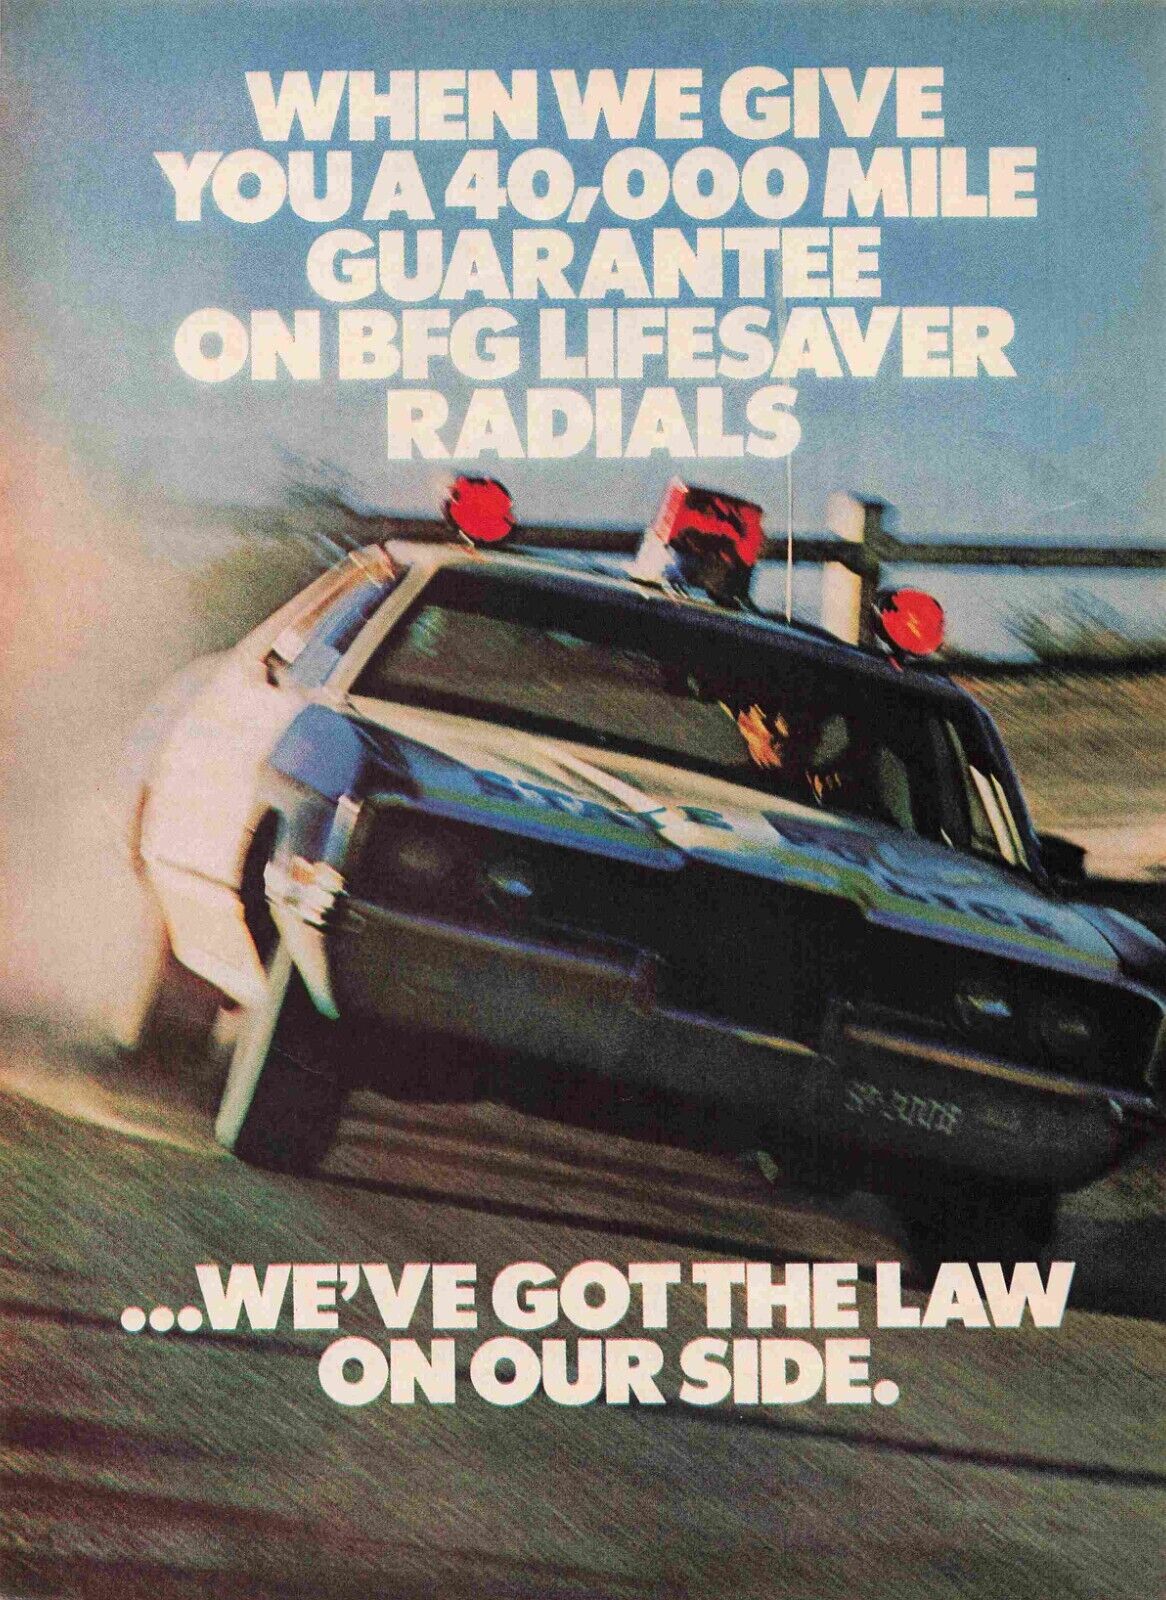 70\'S State Police Bfg Tires Lifesaver Radials Law 1970\'S Print Advertisement